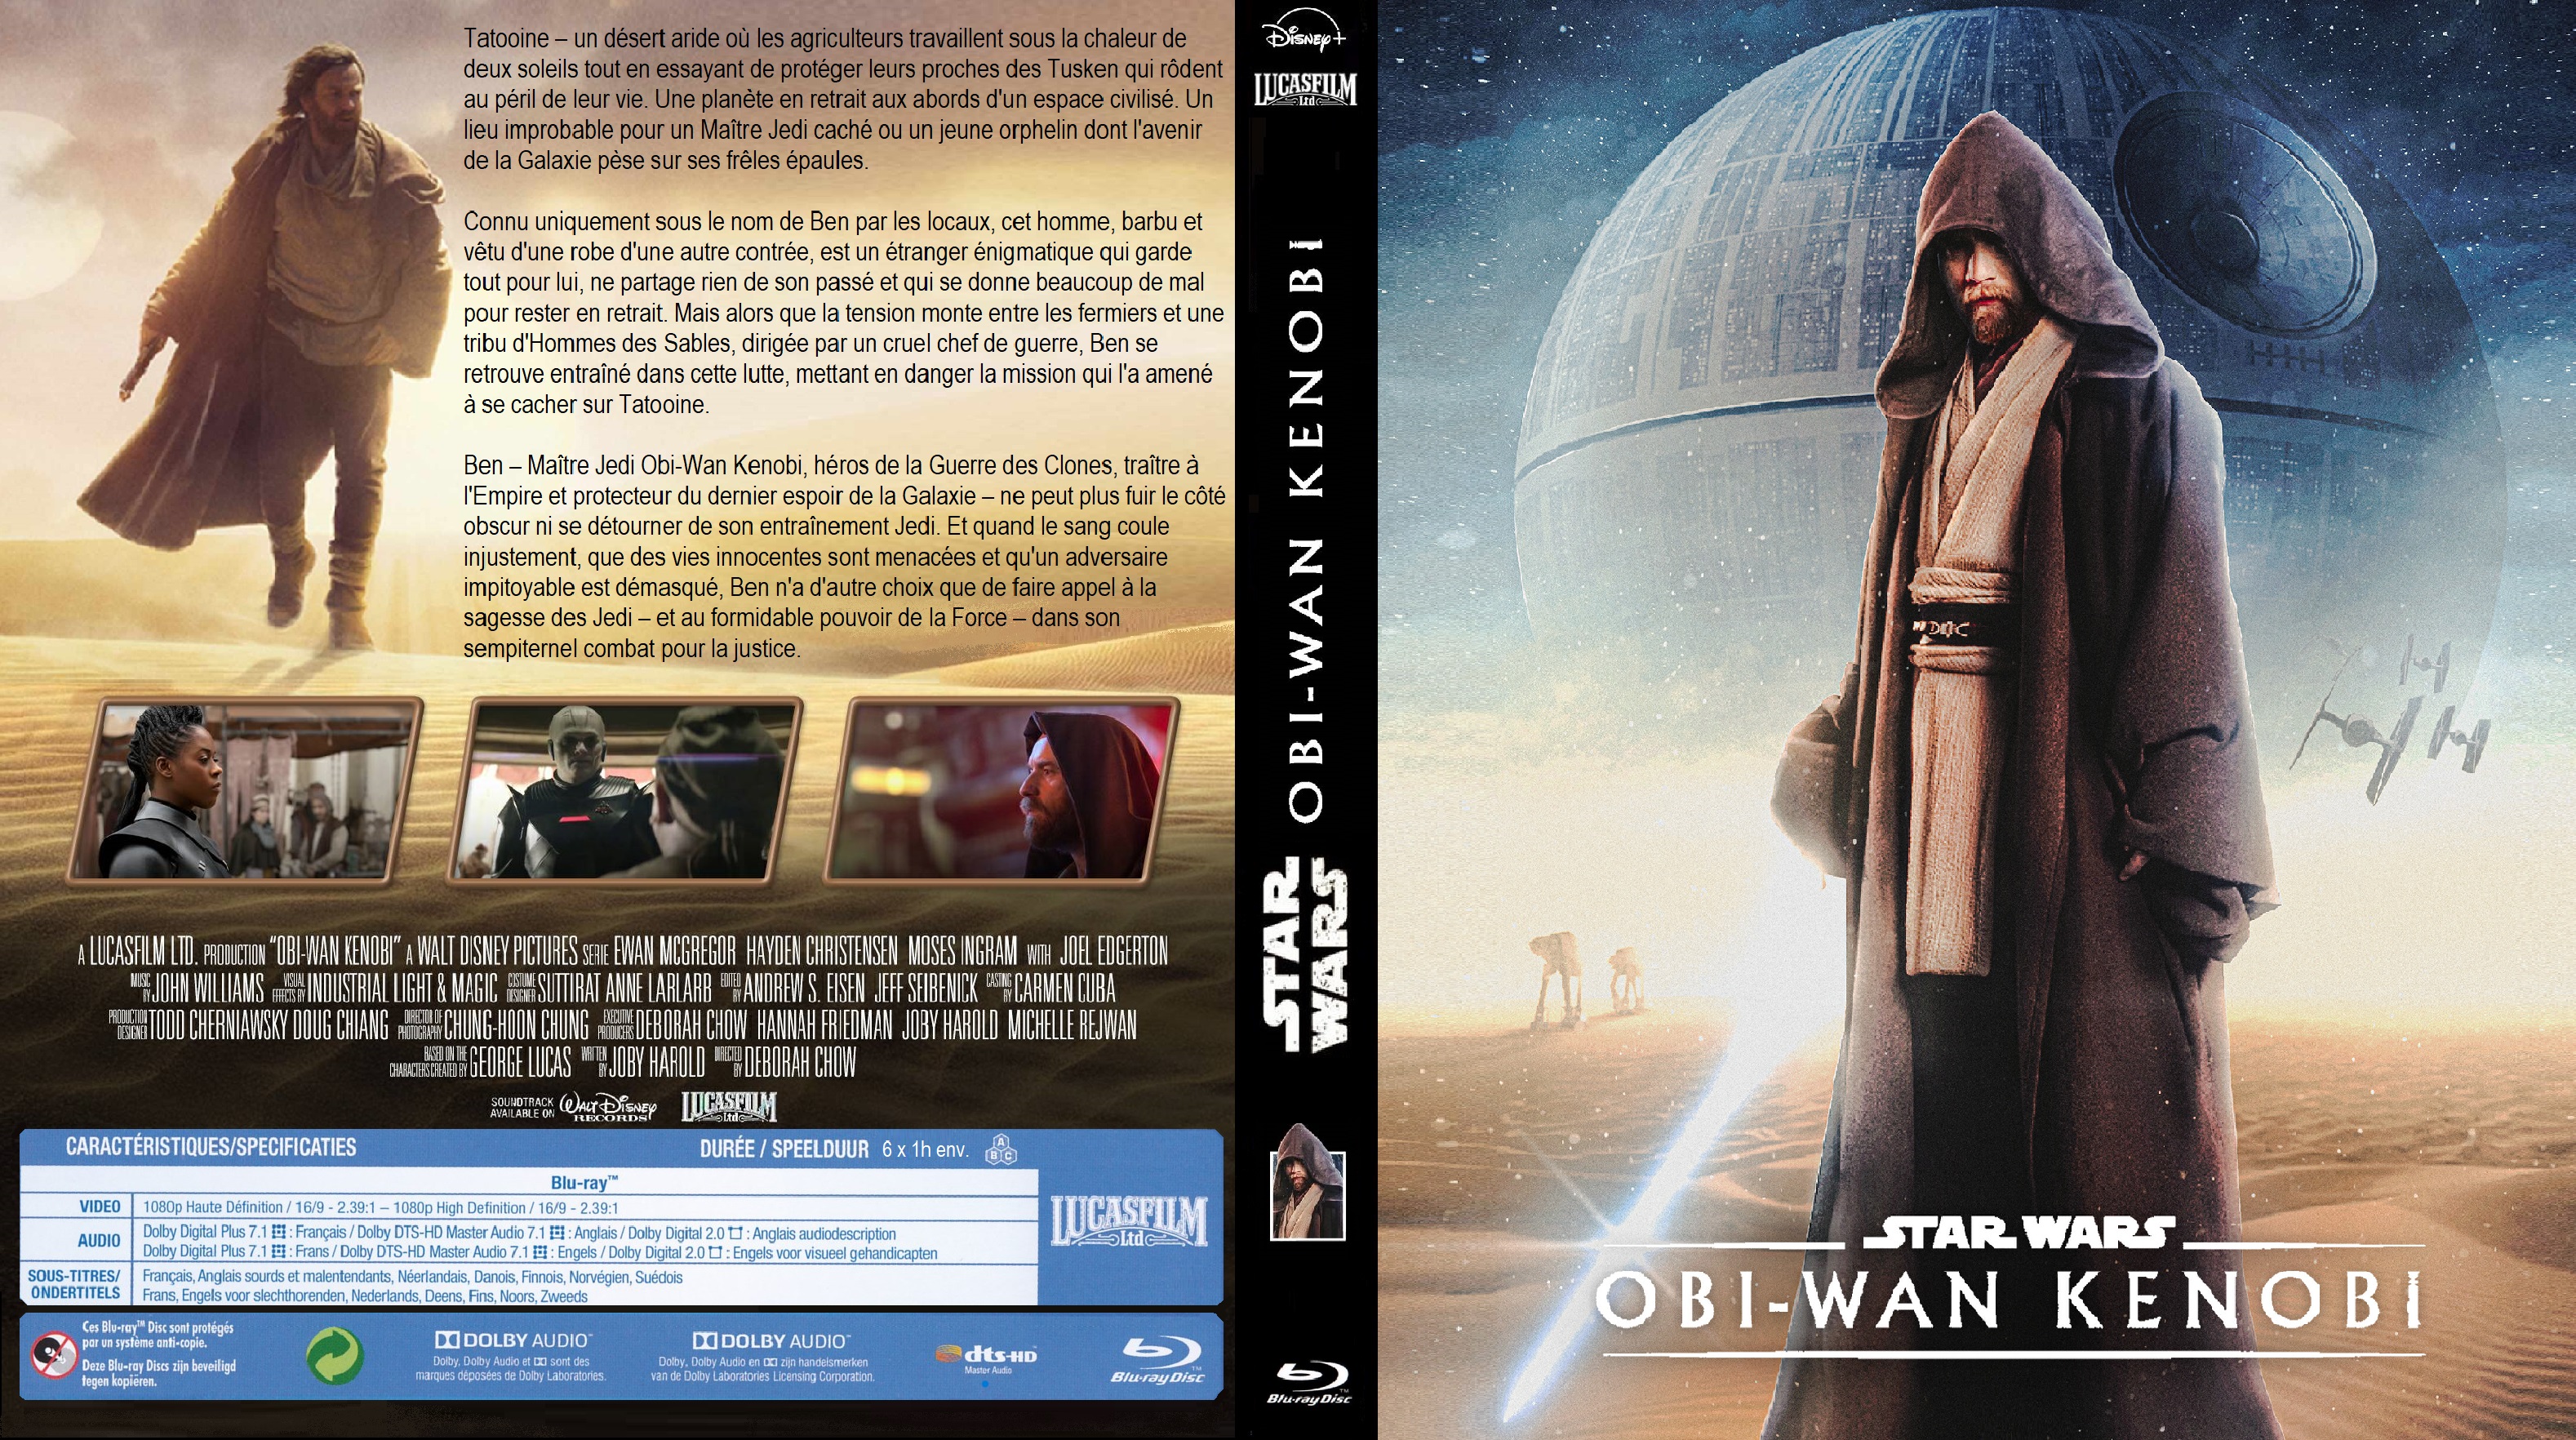 Jaquette DVD Star Wars Obi-Wan Kenobi saison 1 custom (BLU-RAY)